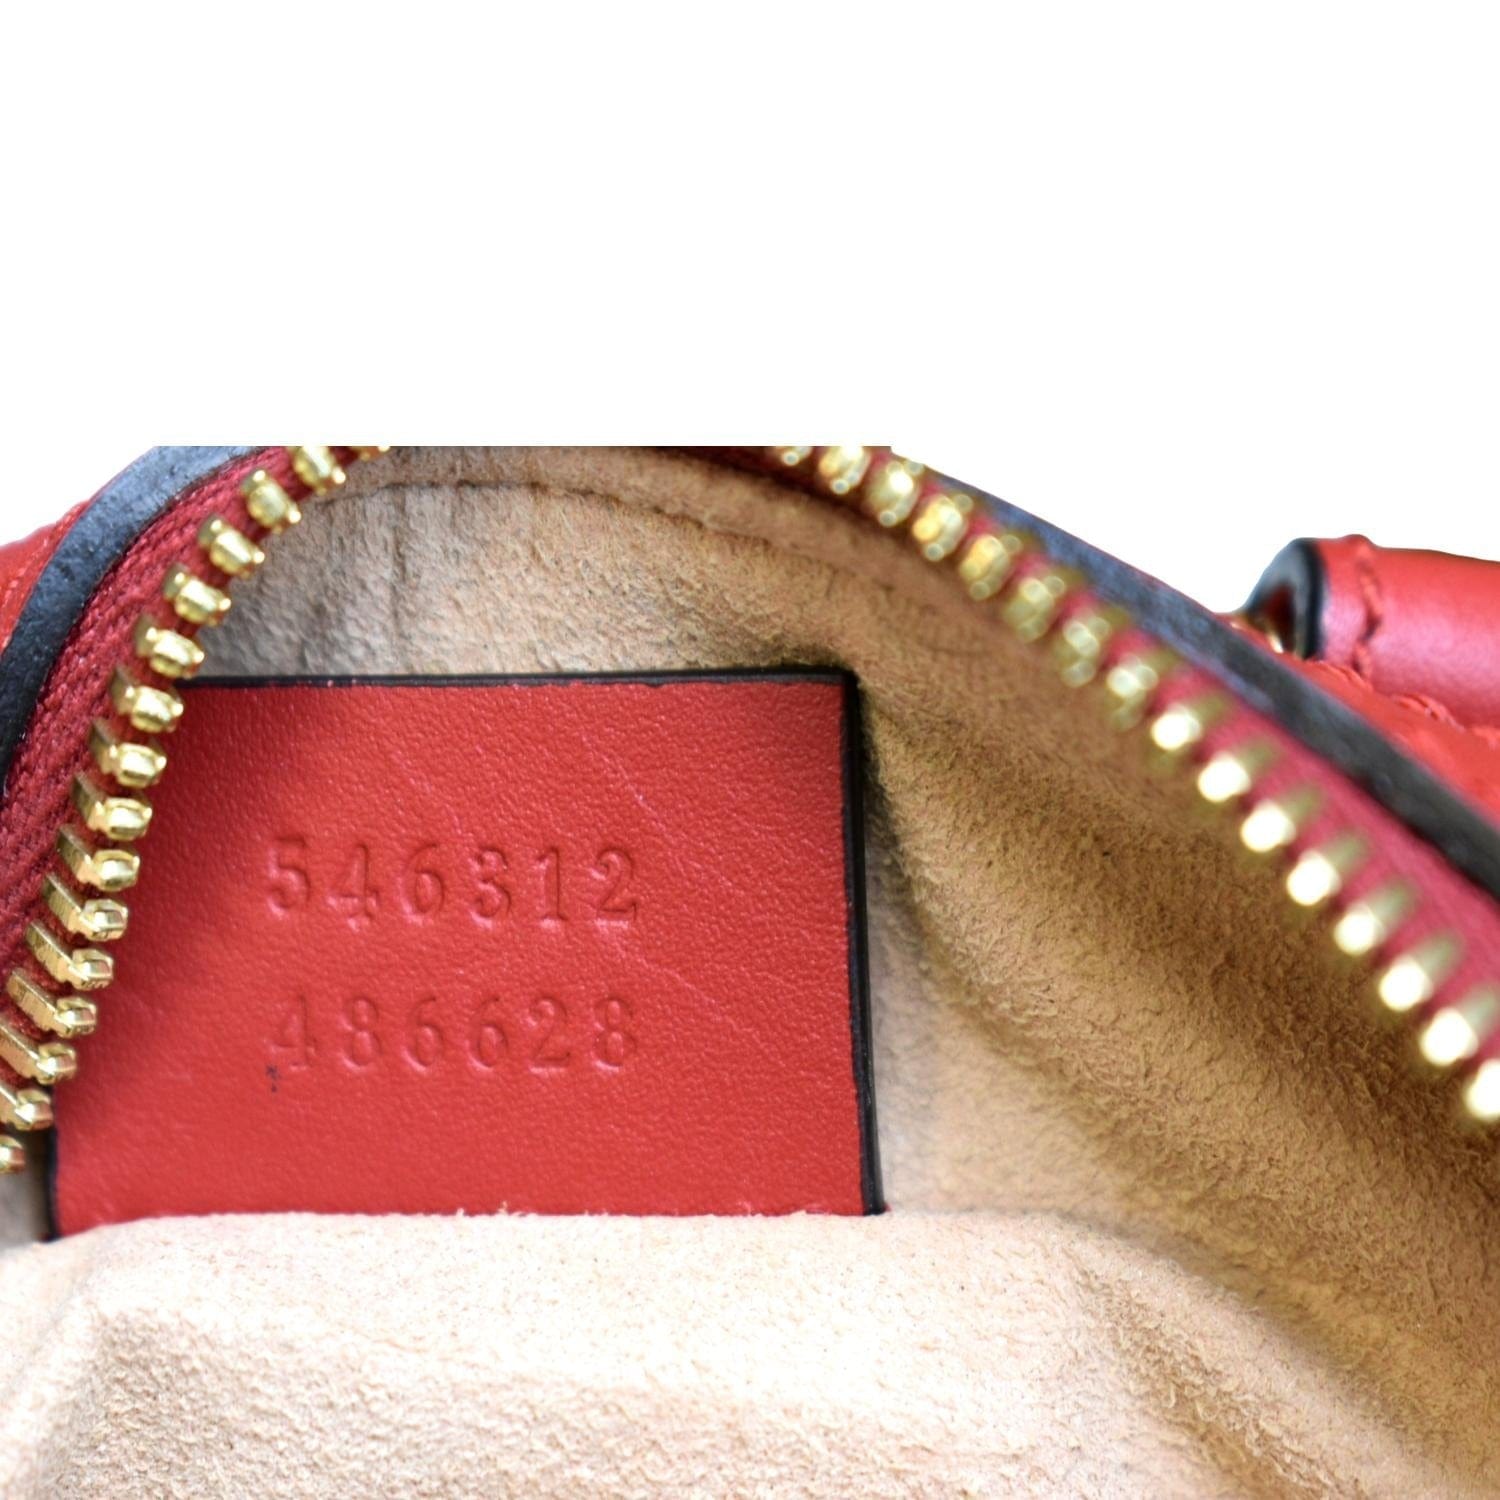 Gucci Gucci Horsebit Fuchsia Pink GG Canvas & Red Leather Shoulder